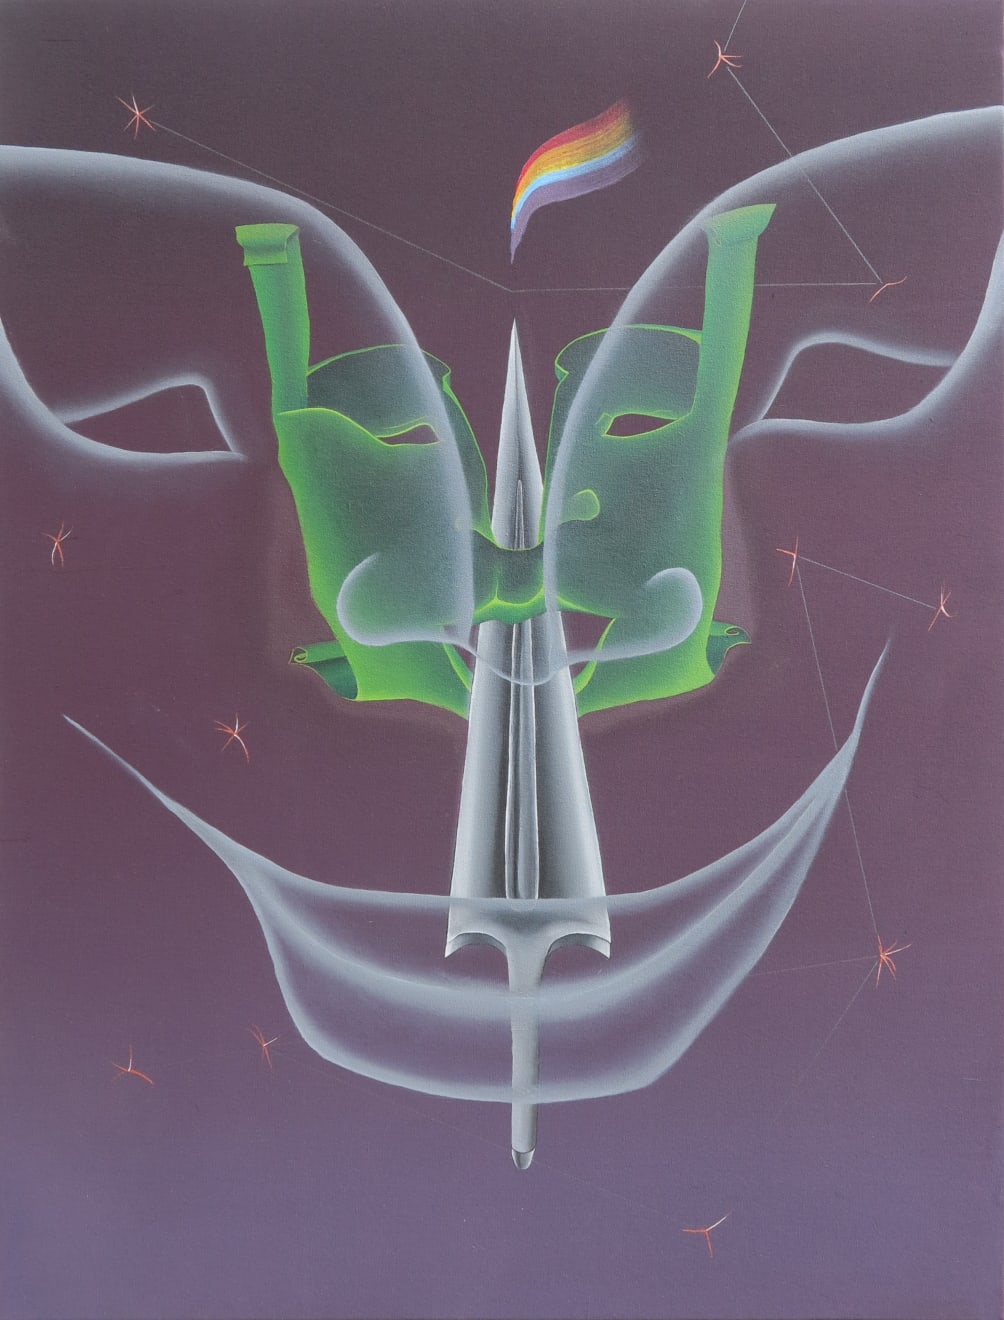 Ponder, enjoy and bask in the surrealist paintings of Alfie Rouy